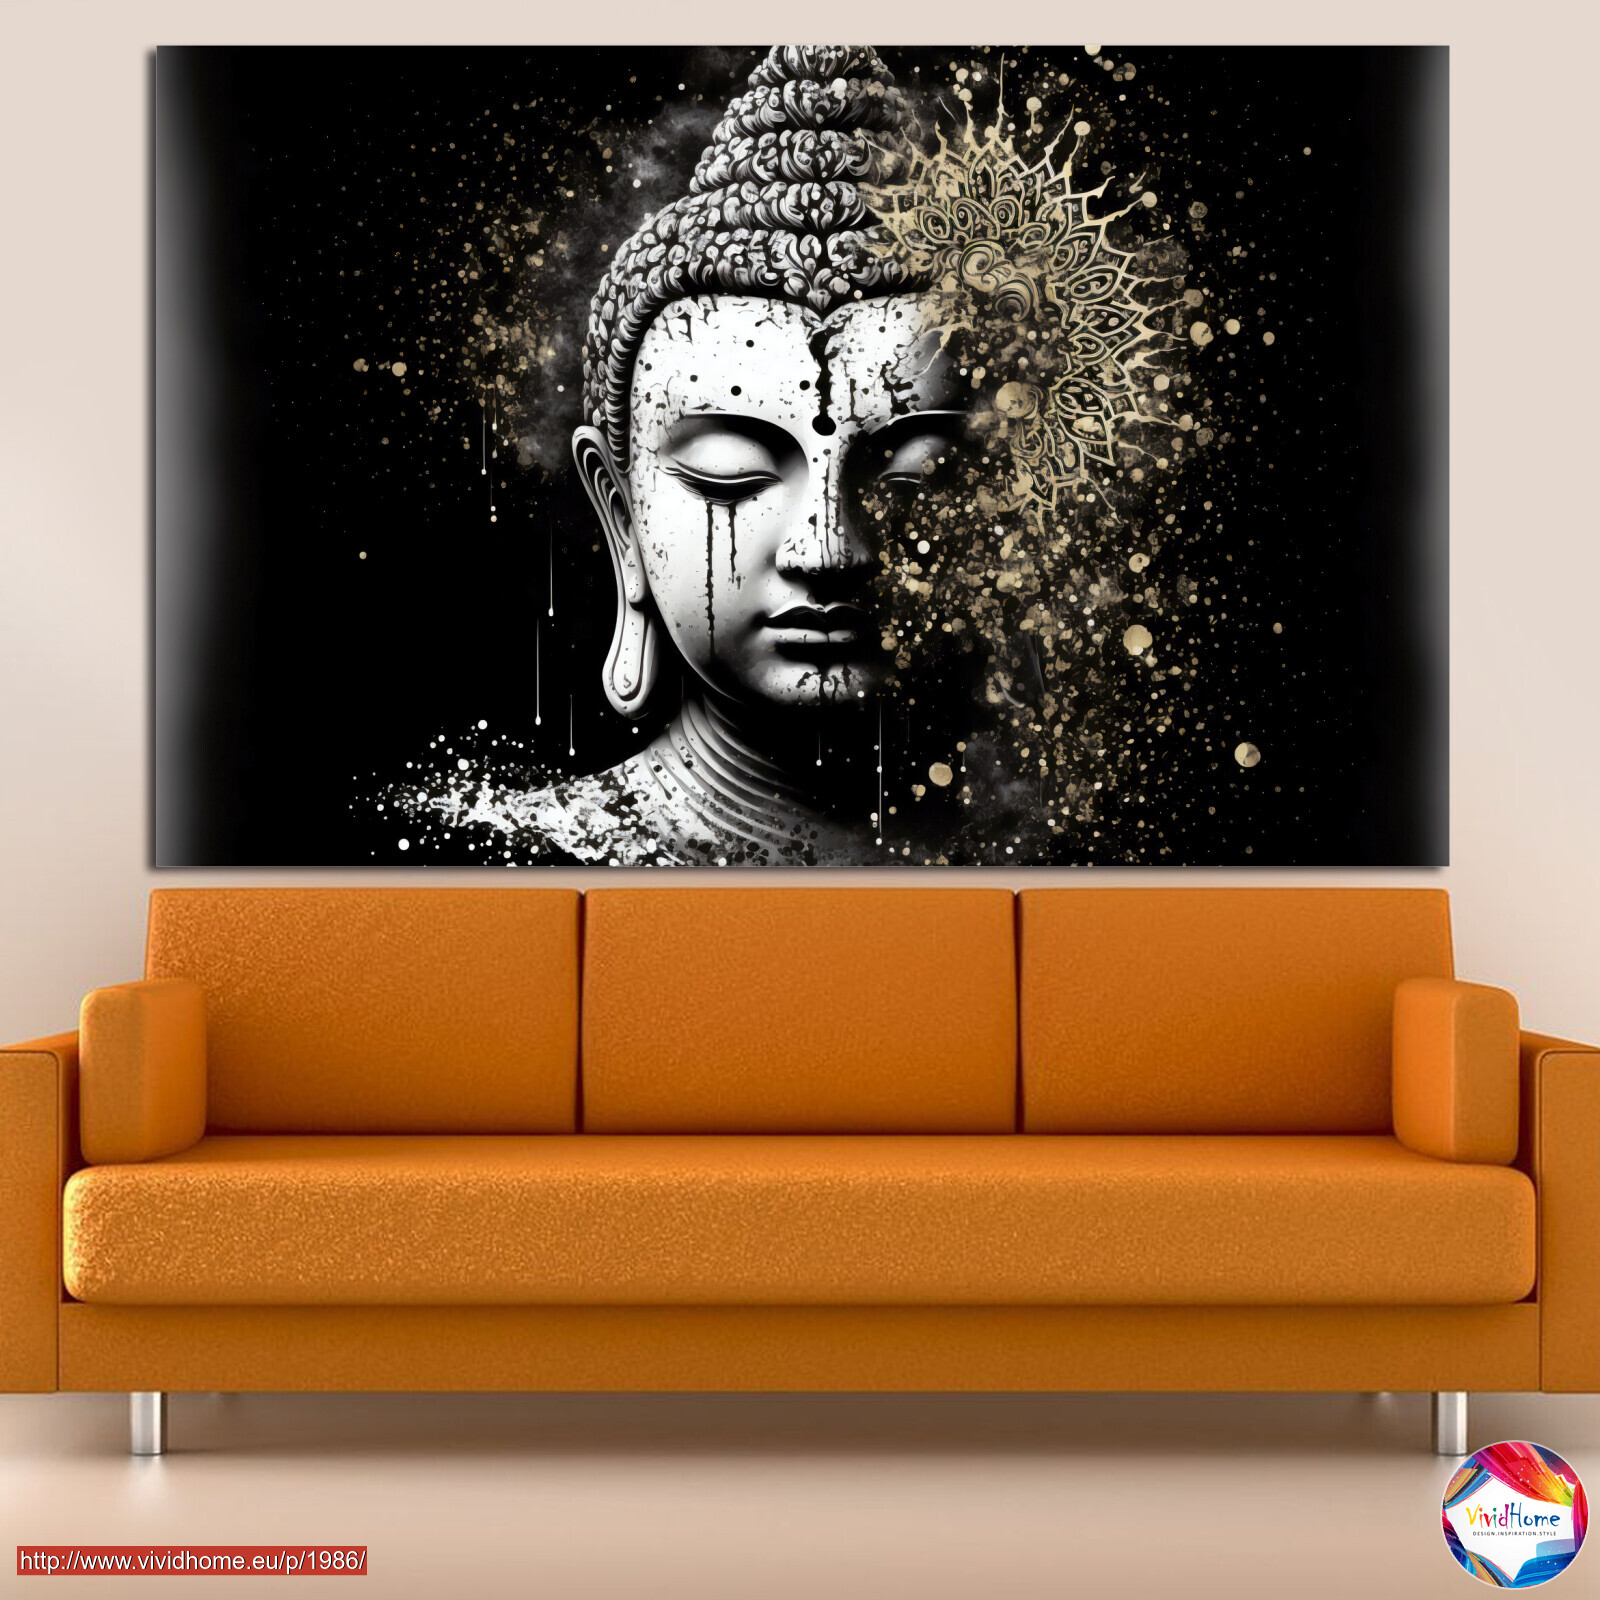 Buddha The of 1 piece №1001 the Spirituality 1